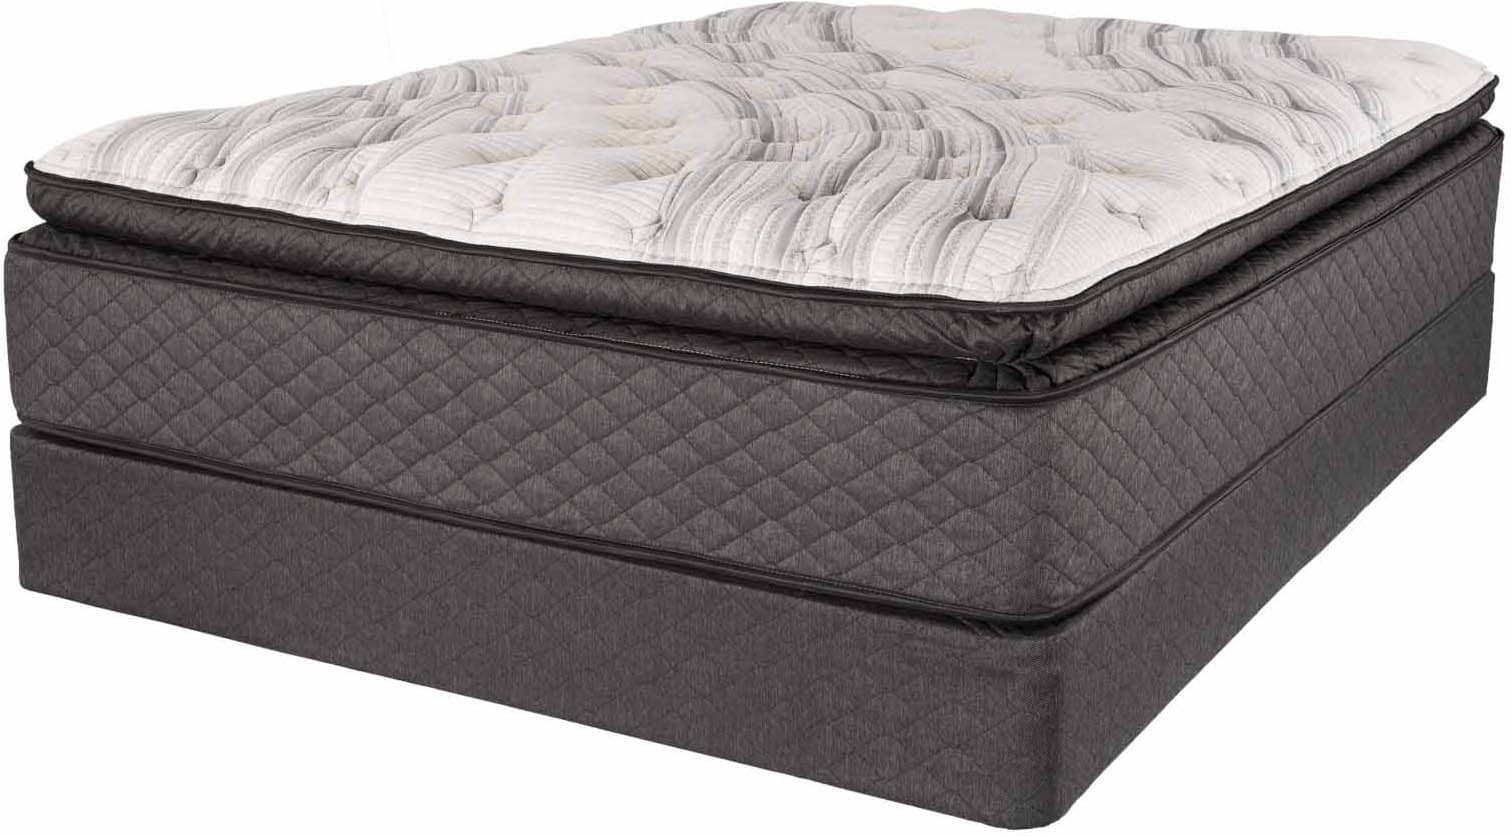 symbol arabella mattress reviews